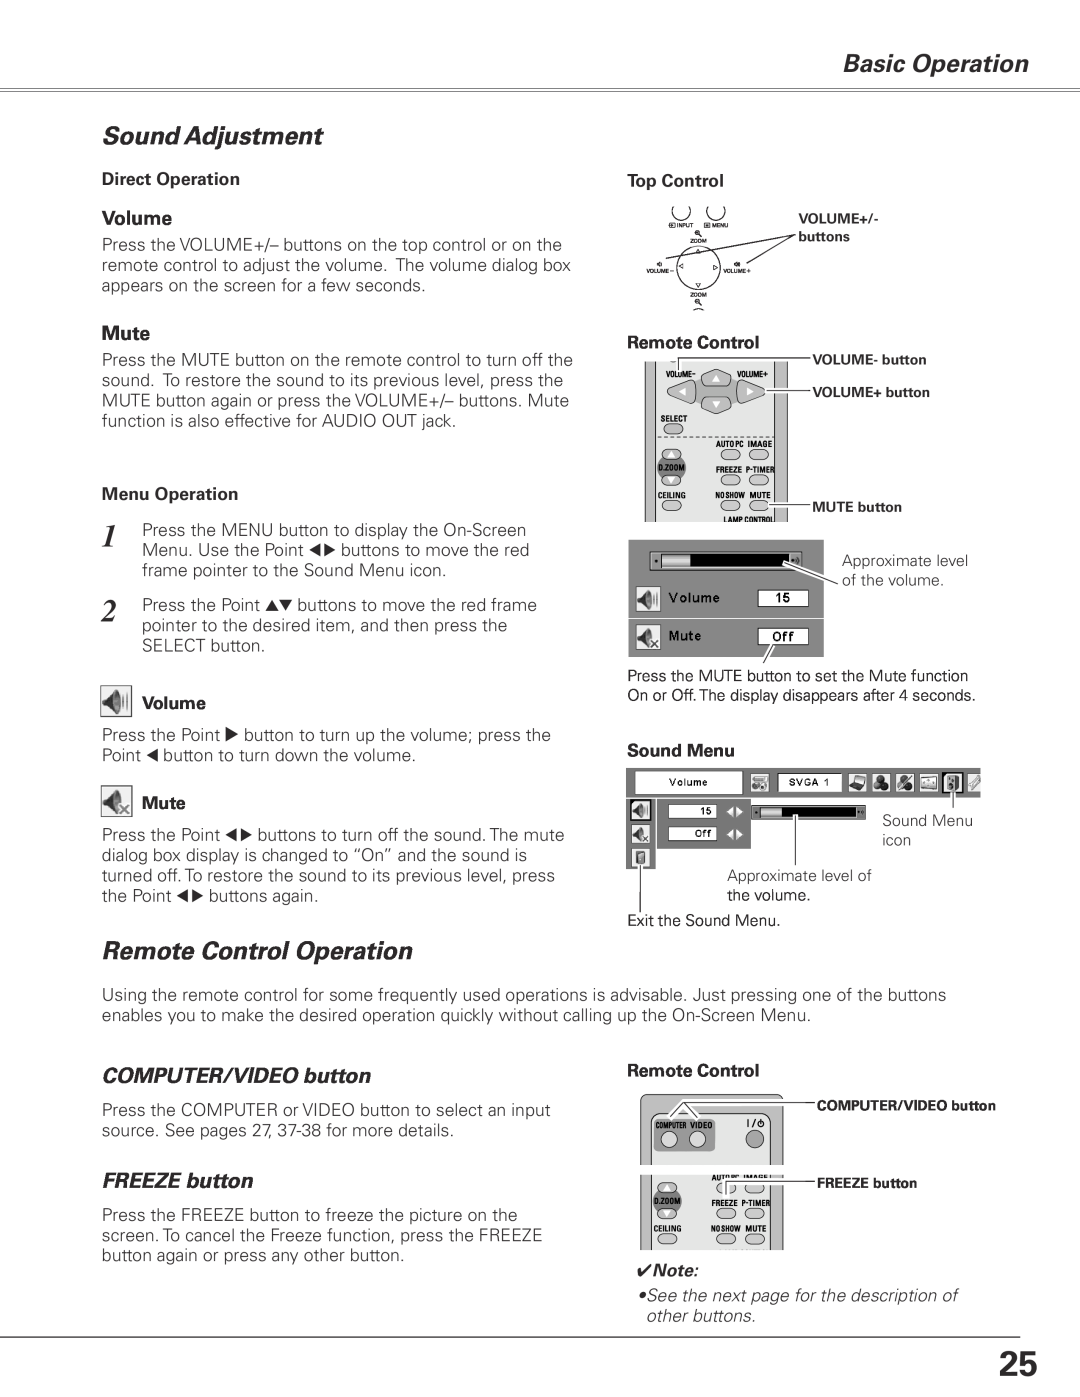 Sanyo PLC-XL50A Sound Adjustment, Remote Control Operation, COMPUTER/VIDEO button, FREEZE button, Basic Operation, Volume 